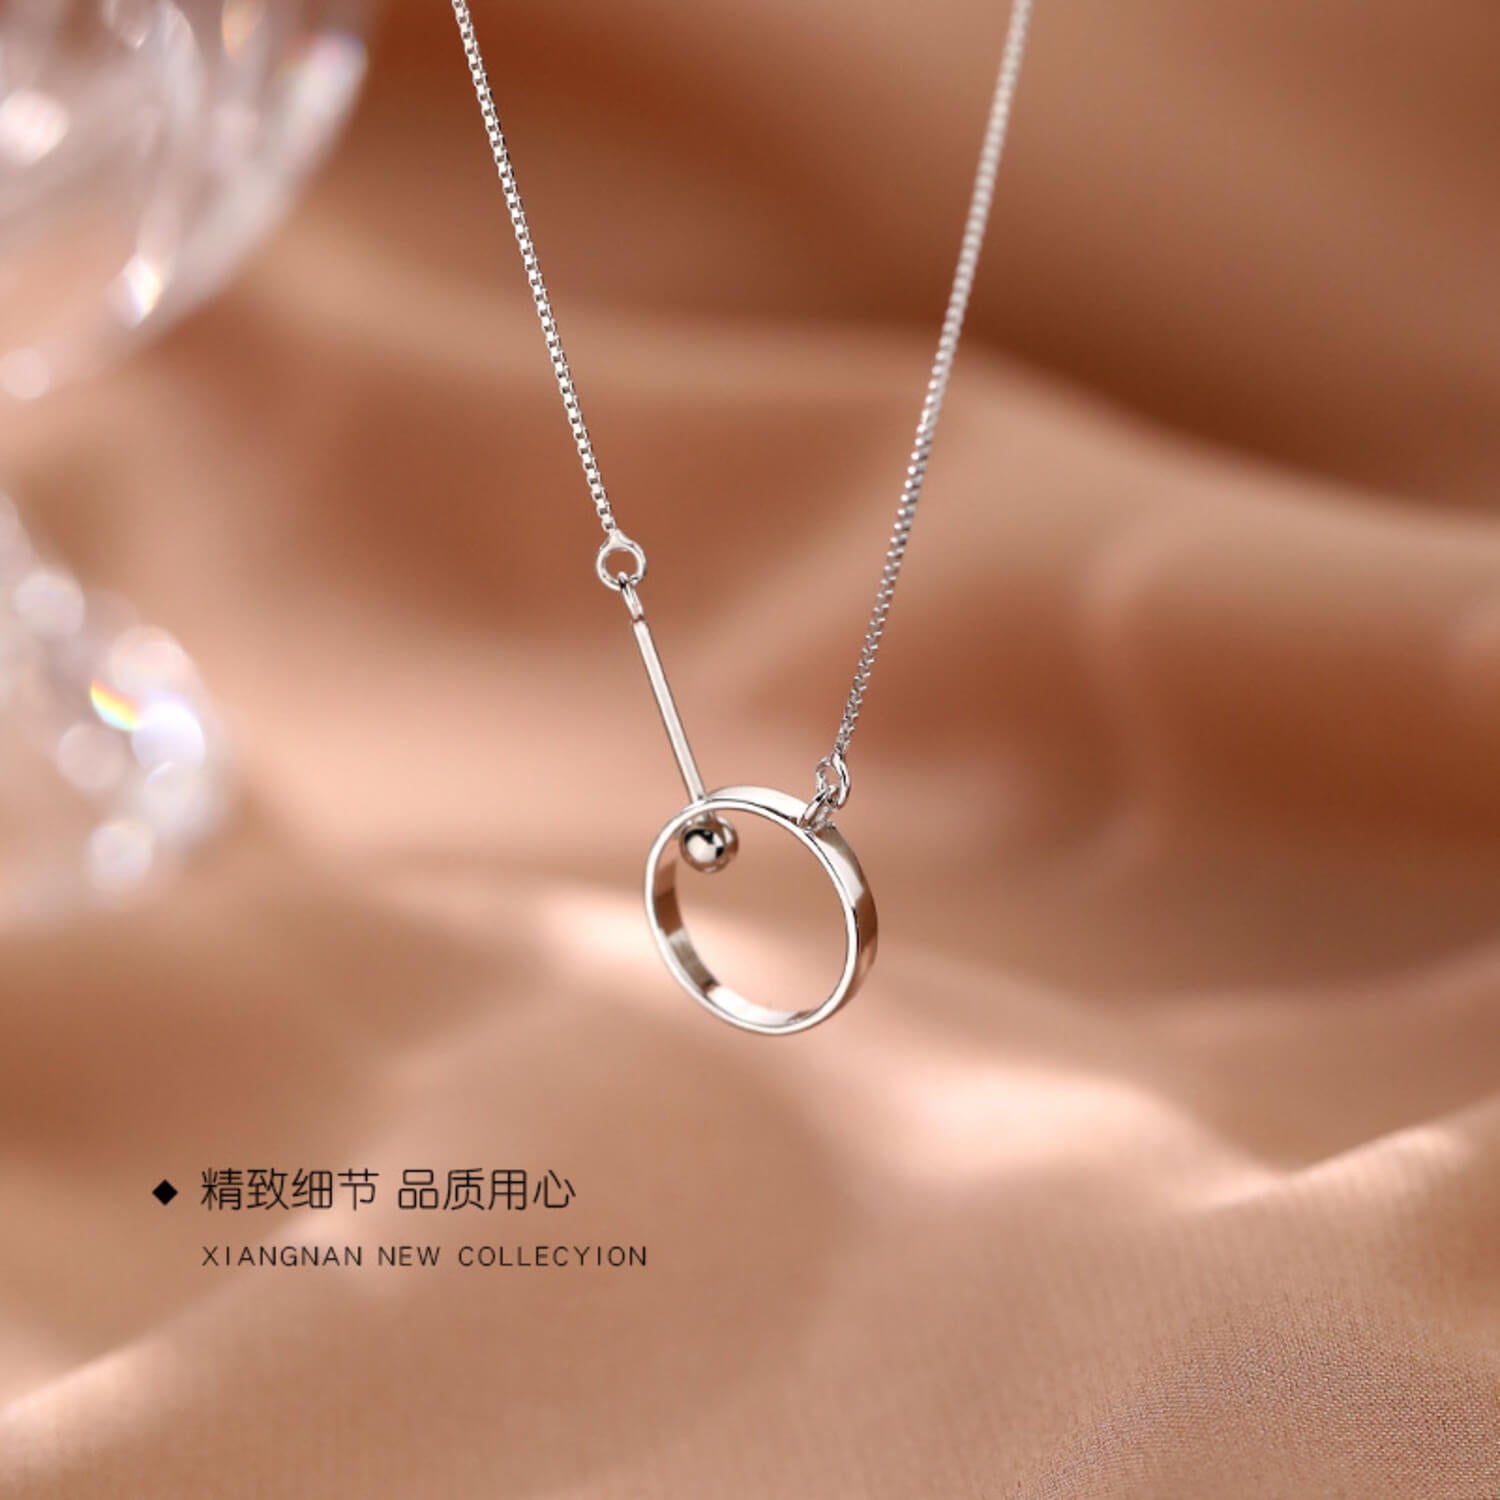 	 necklace with bar through circle